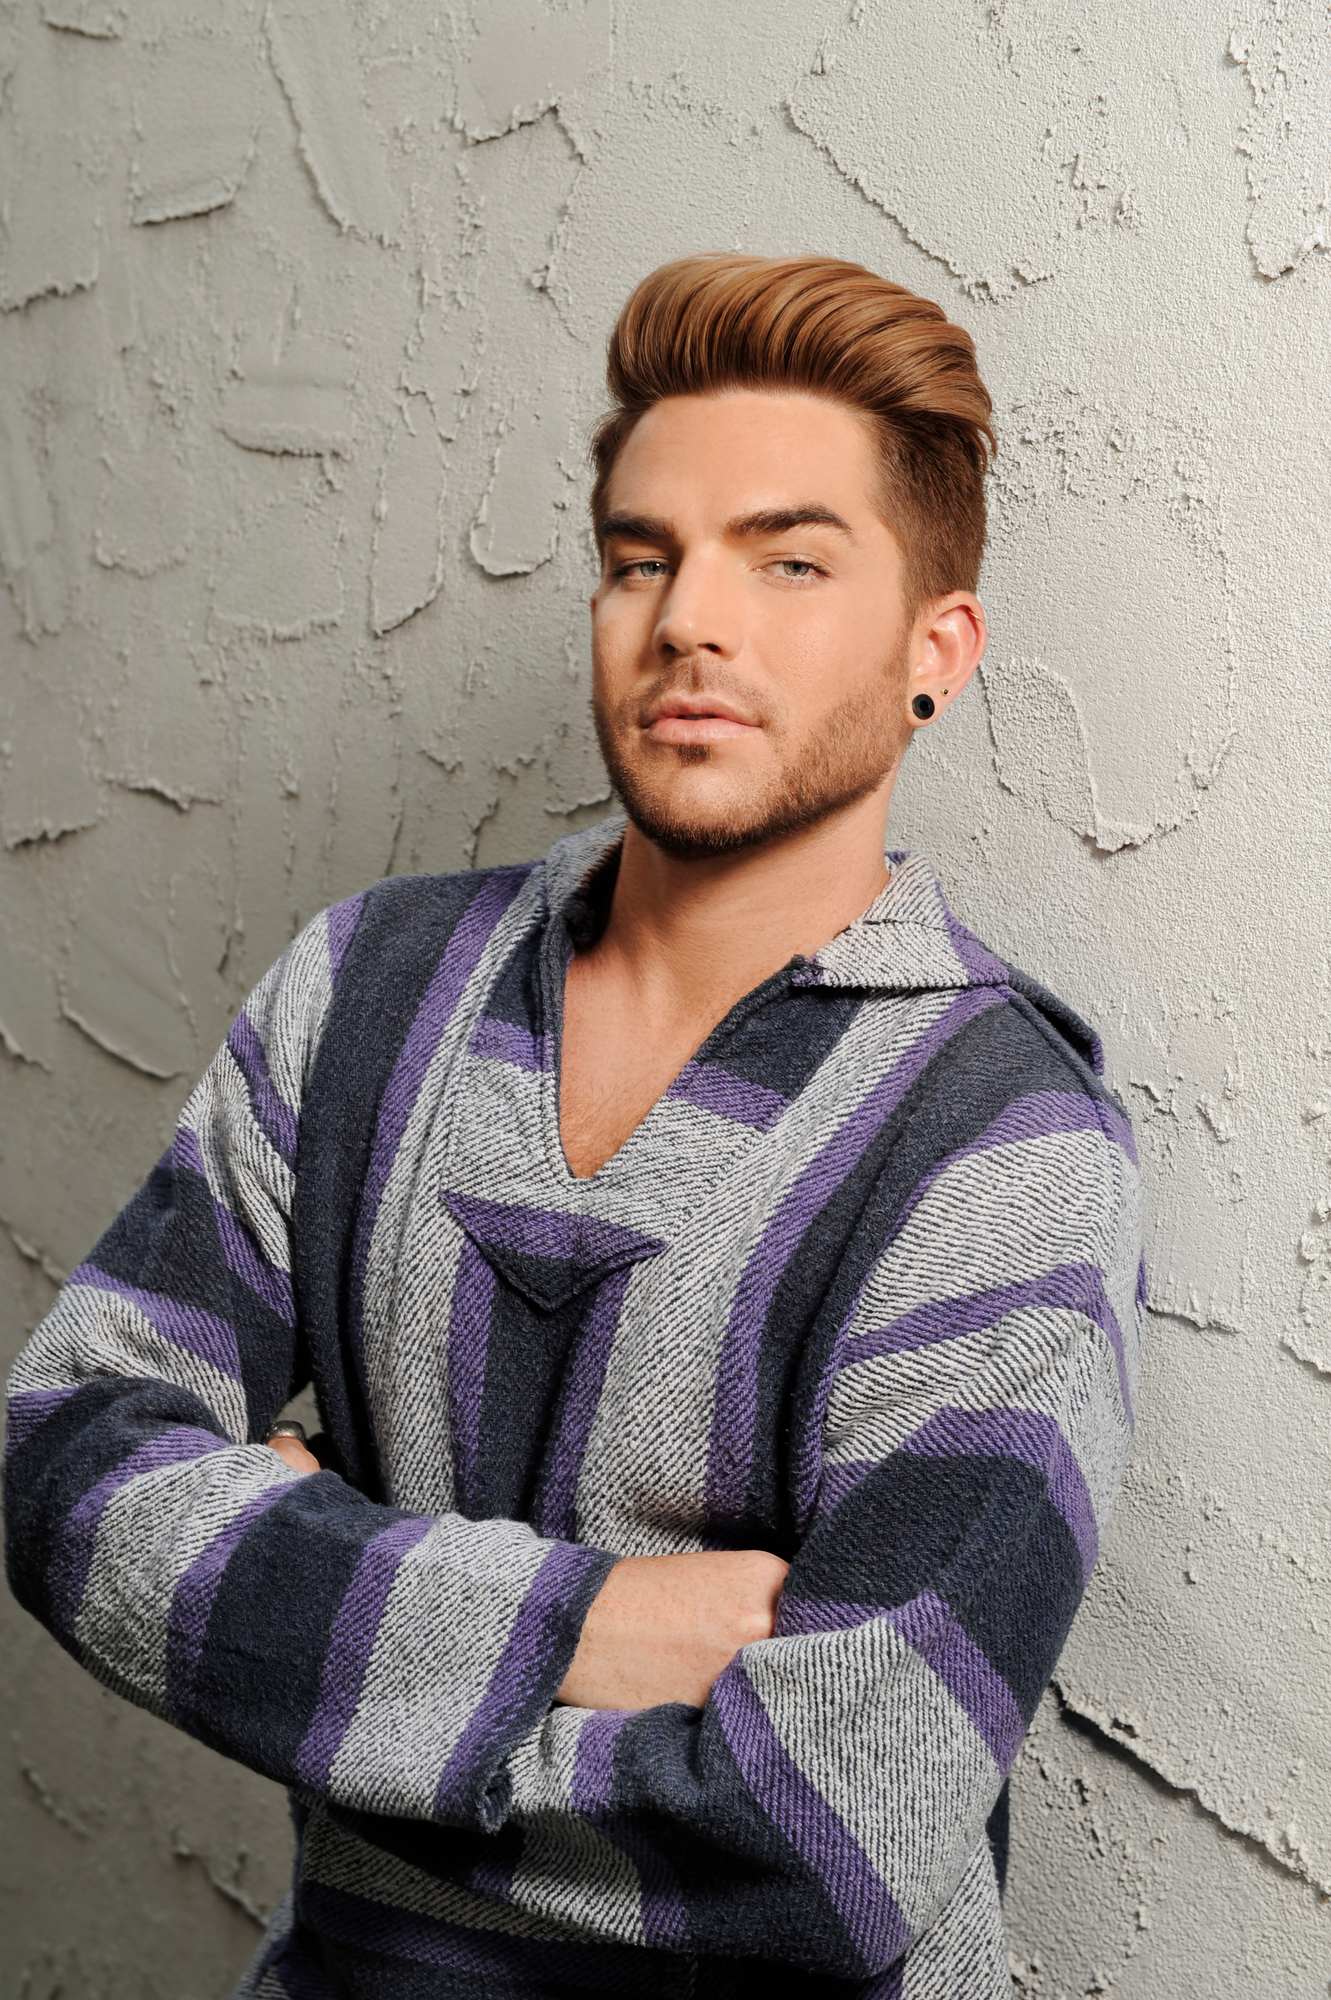 Adam Lambert For Los Angeles Times Shoots